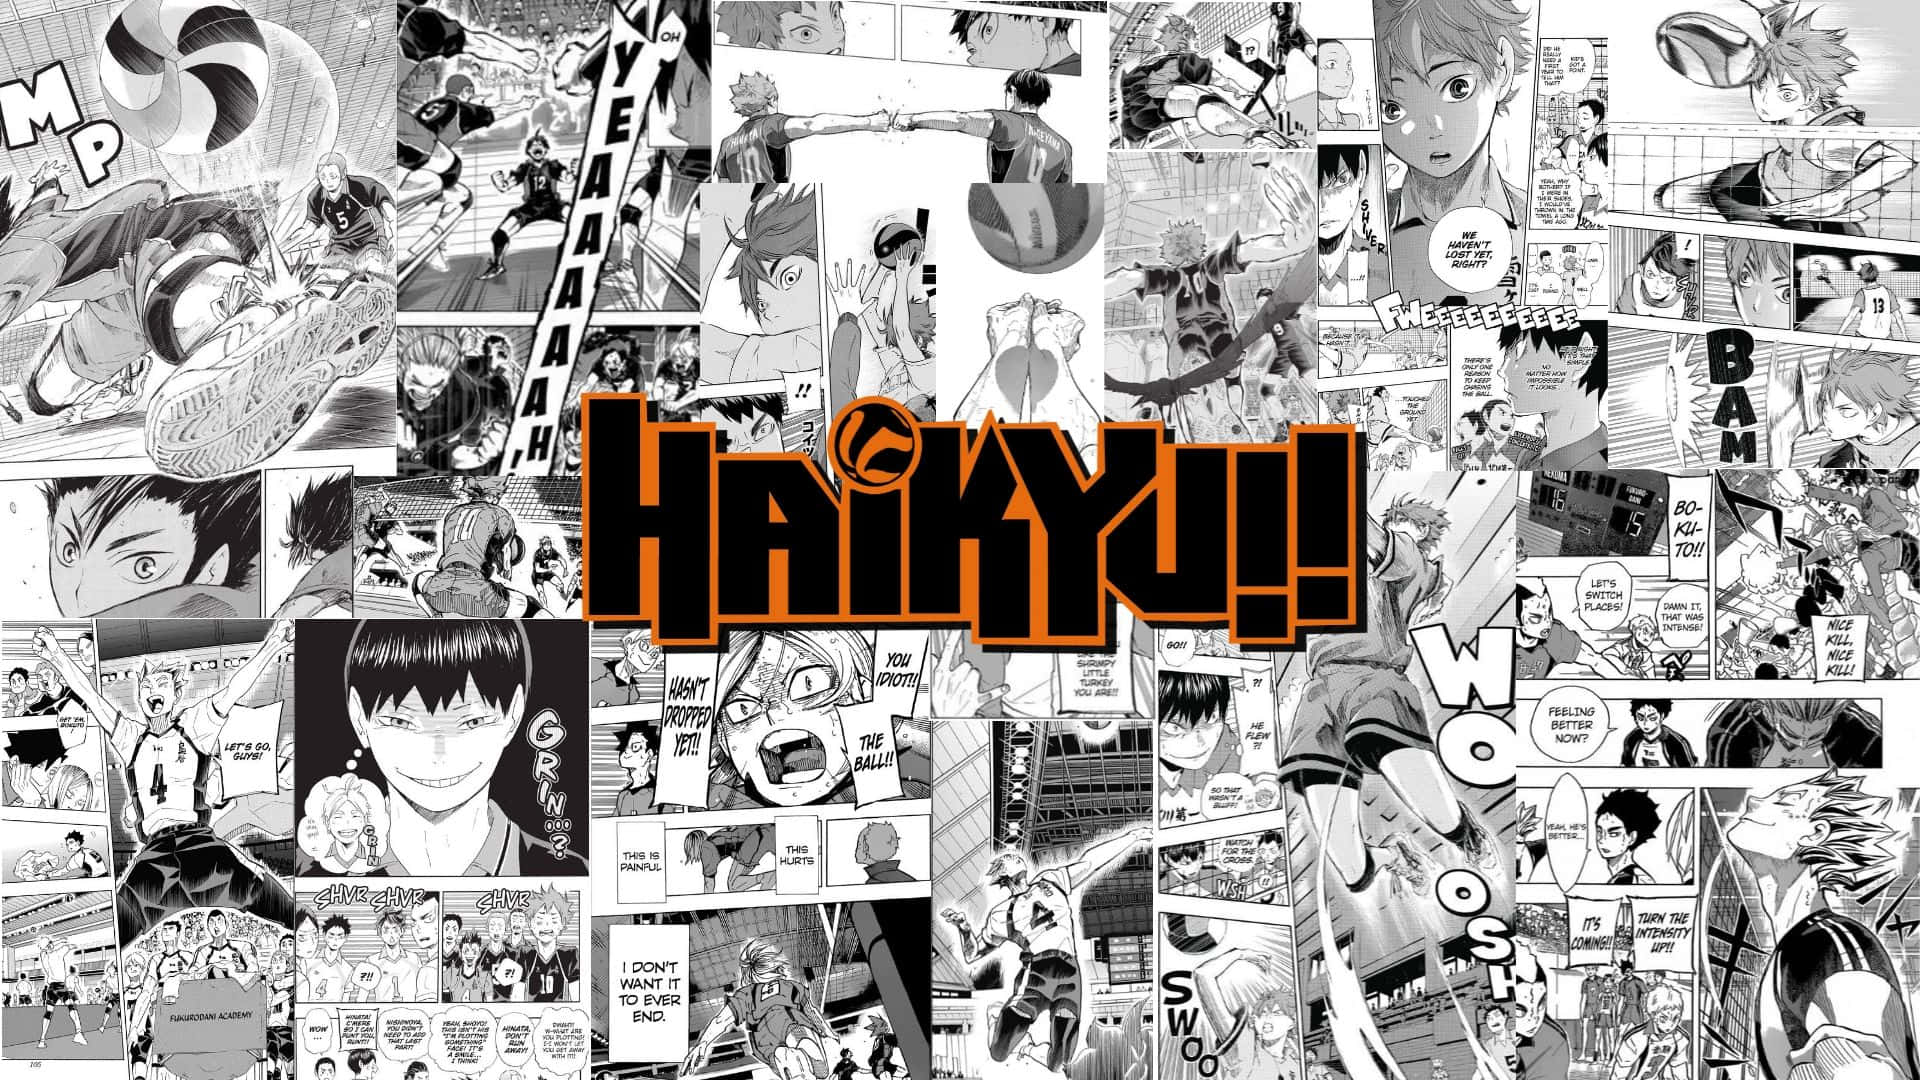 Download Aesthetic Desktop featuring the manga/anime 'Haikyuu!' Wallpaper